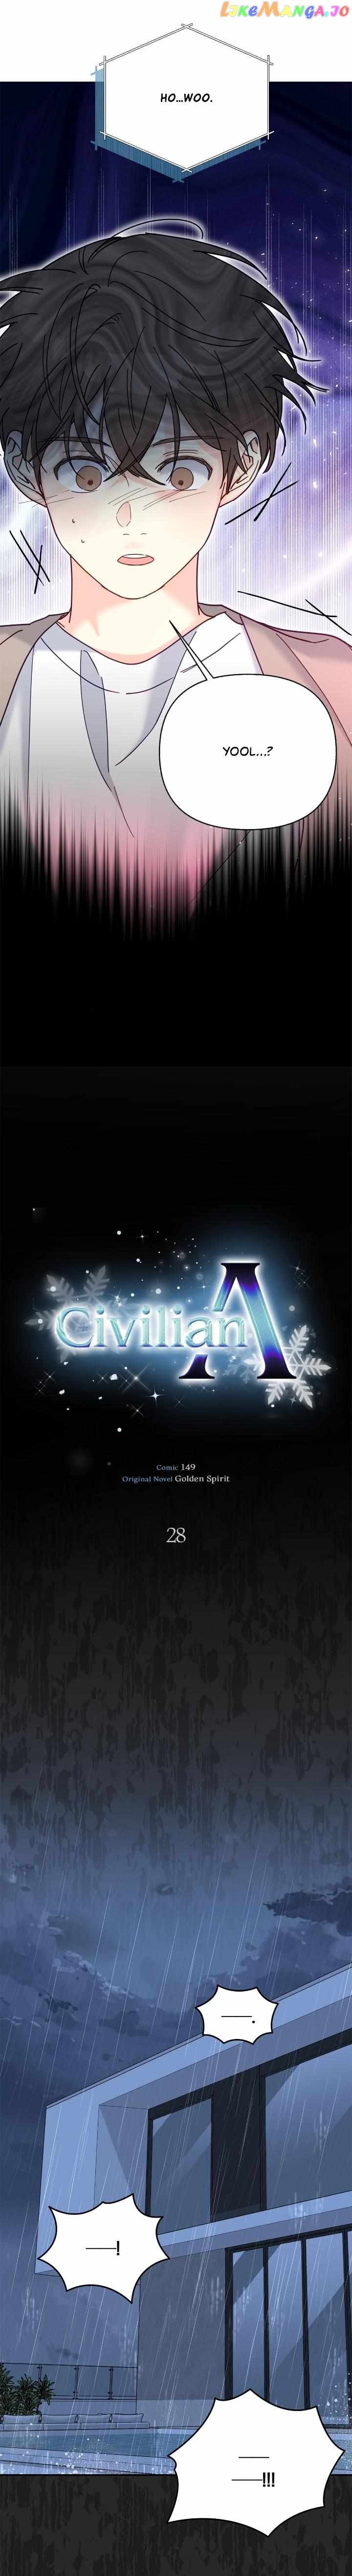 Civilian A - chapter 28 - #4